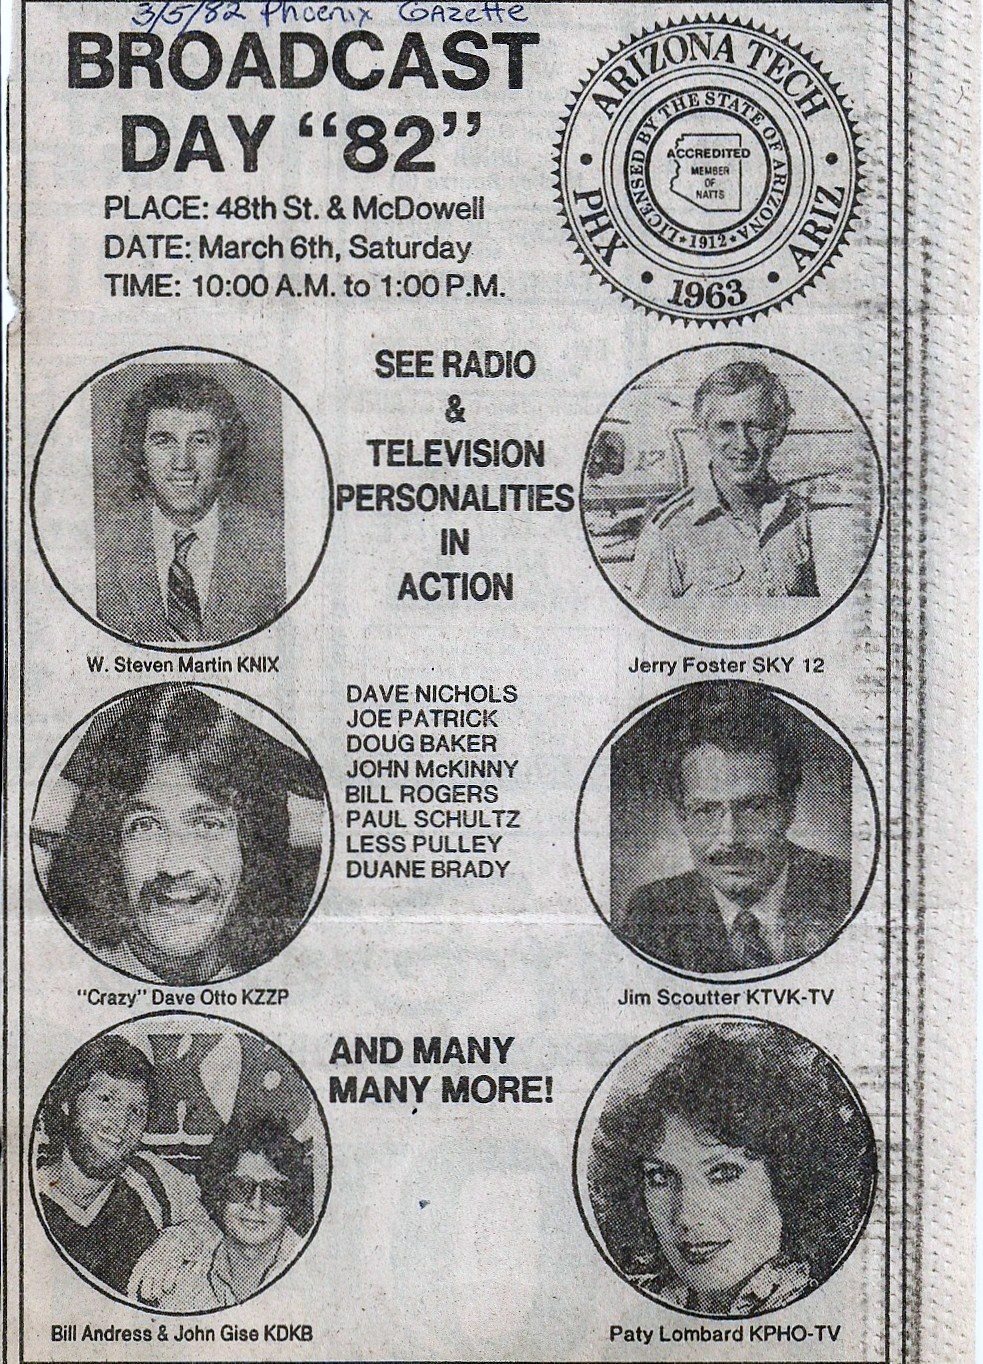 The Phoenix Gazette, March 5, 1982 